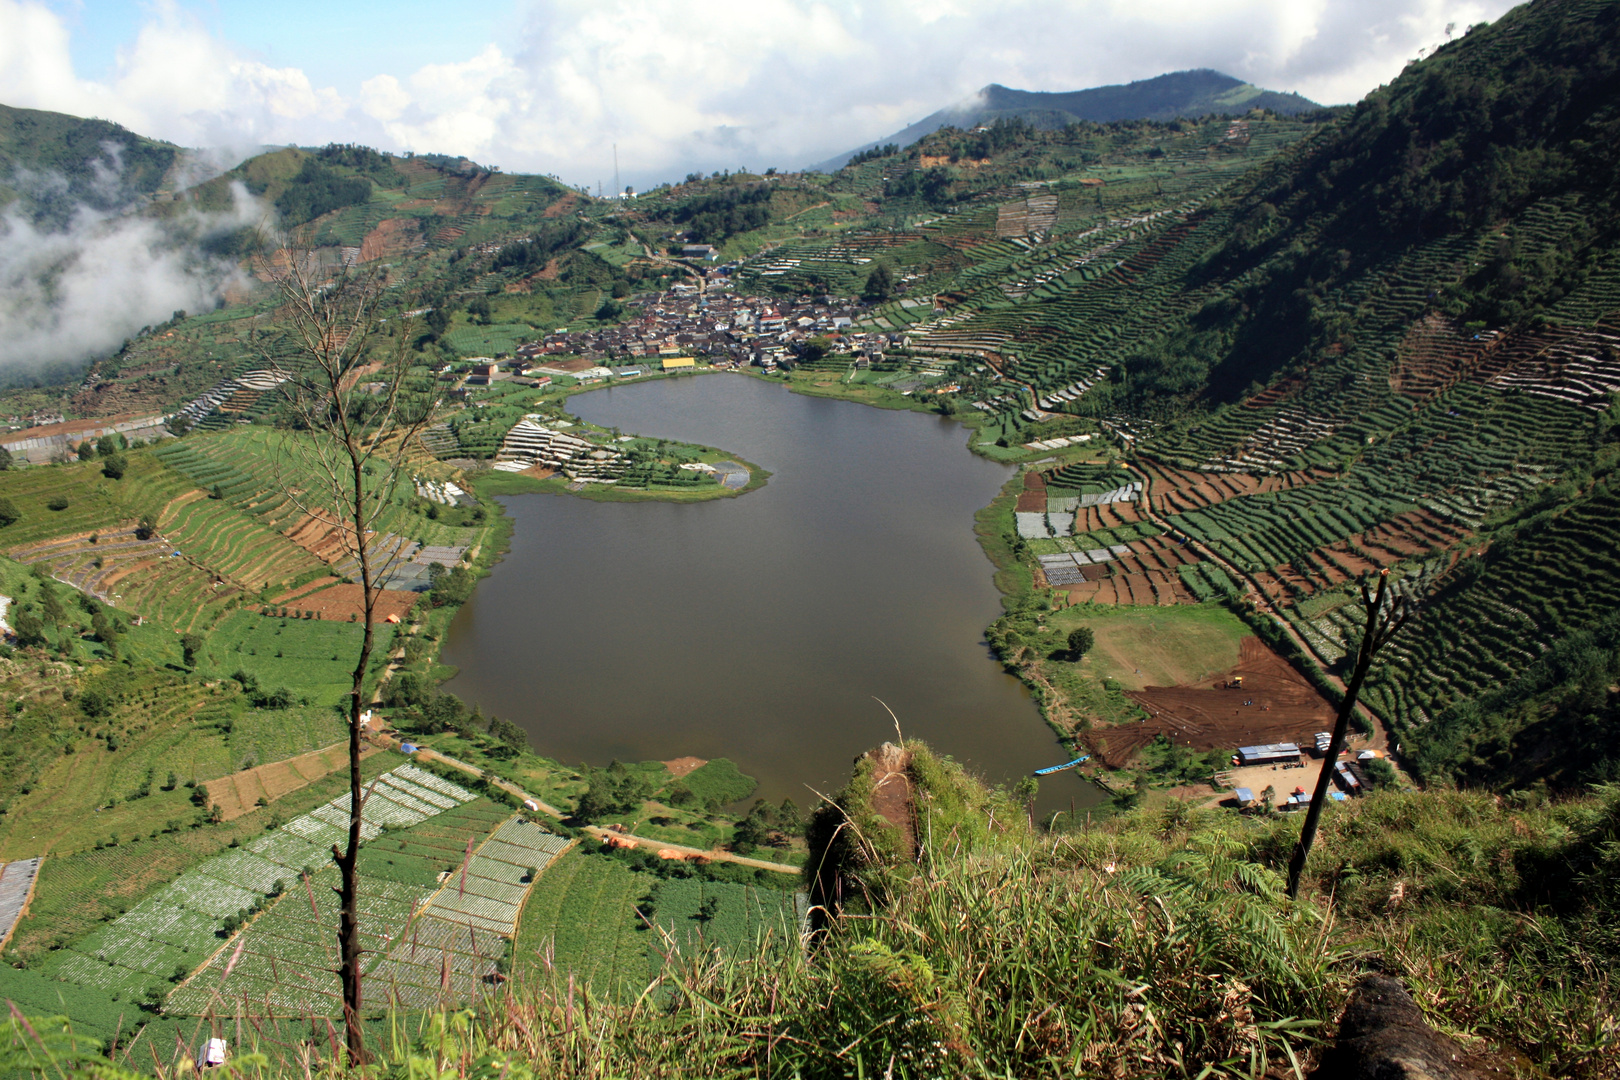 Telaga Cebong, the lake above the clouds